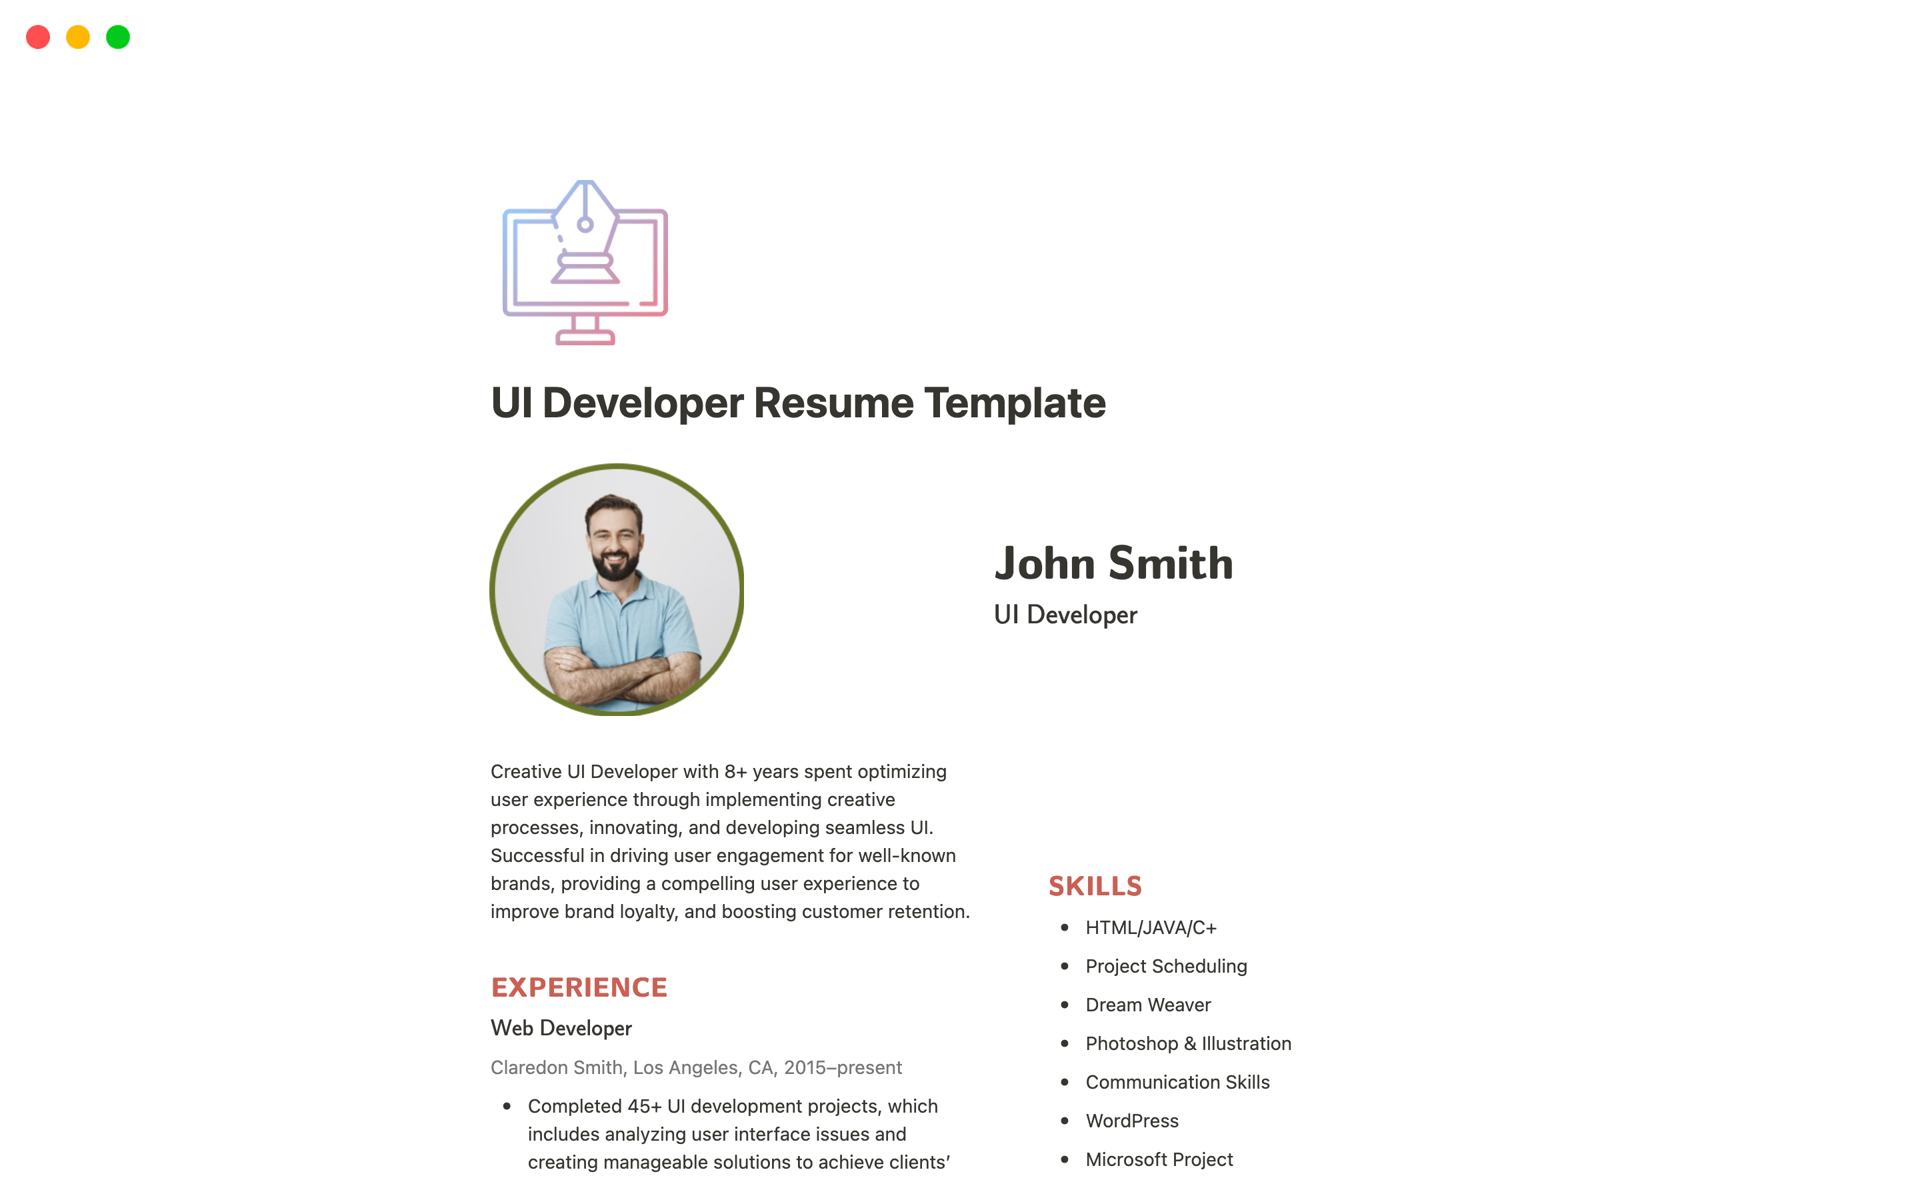 Vista previa de una plantilla para UI Developer Resume